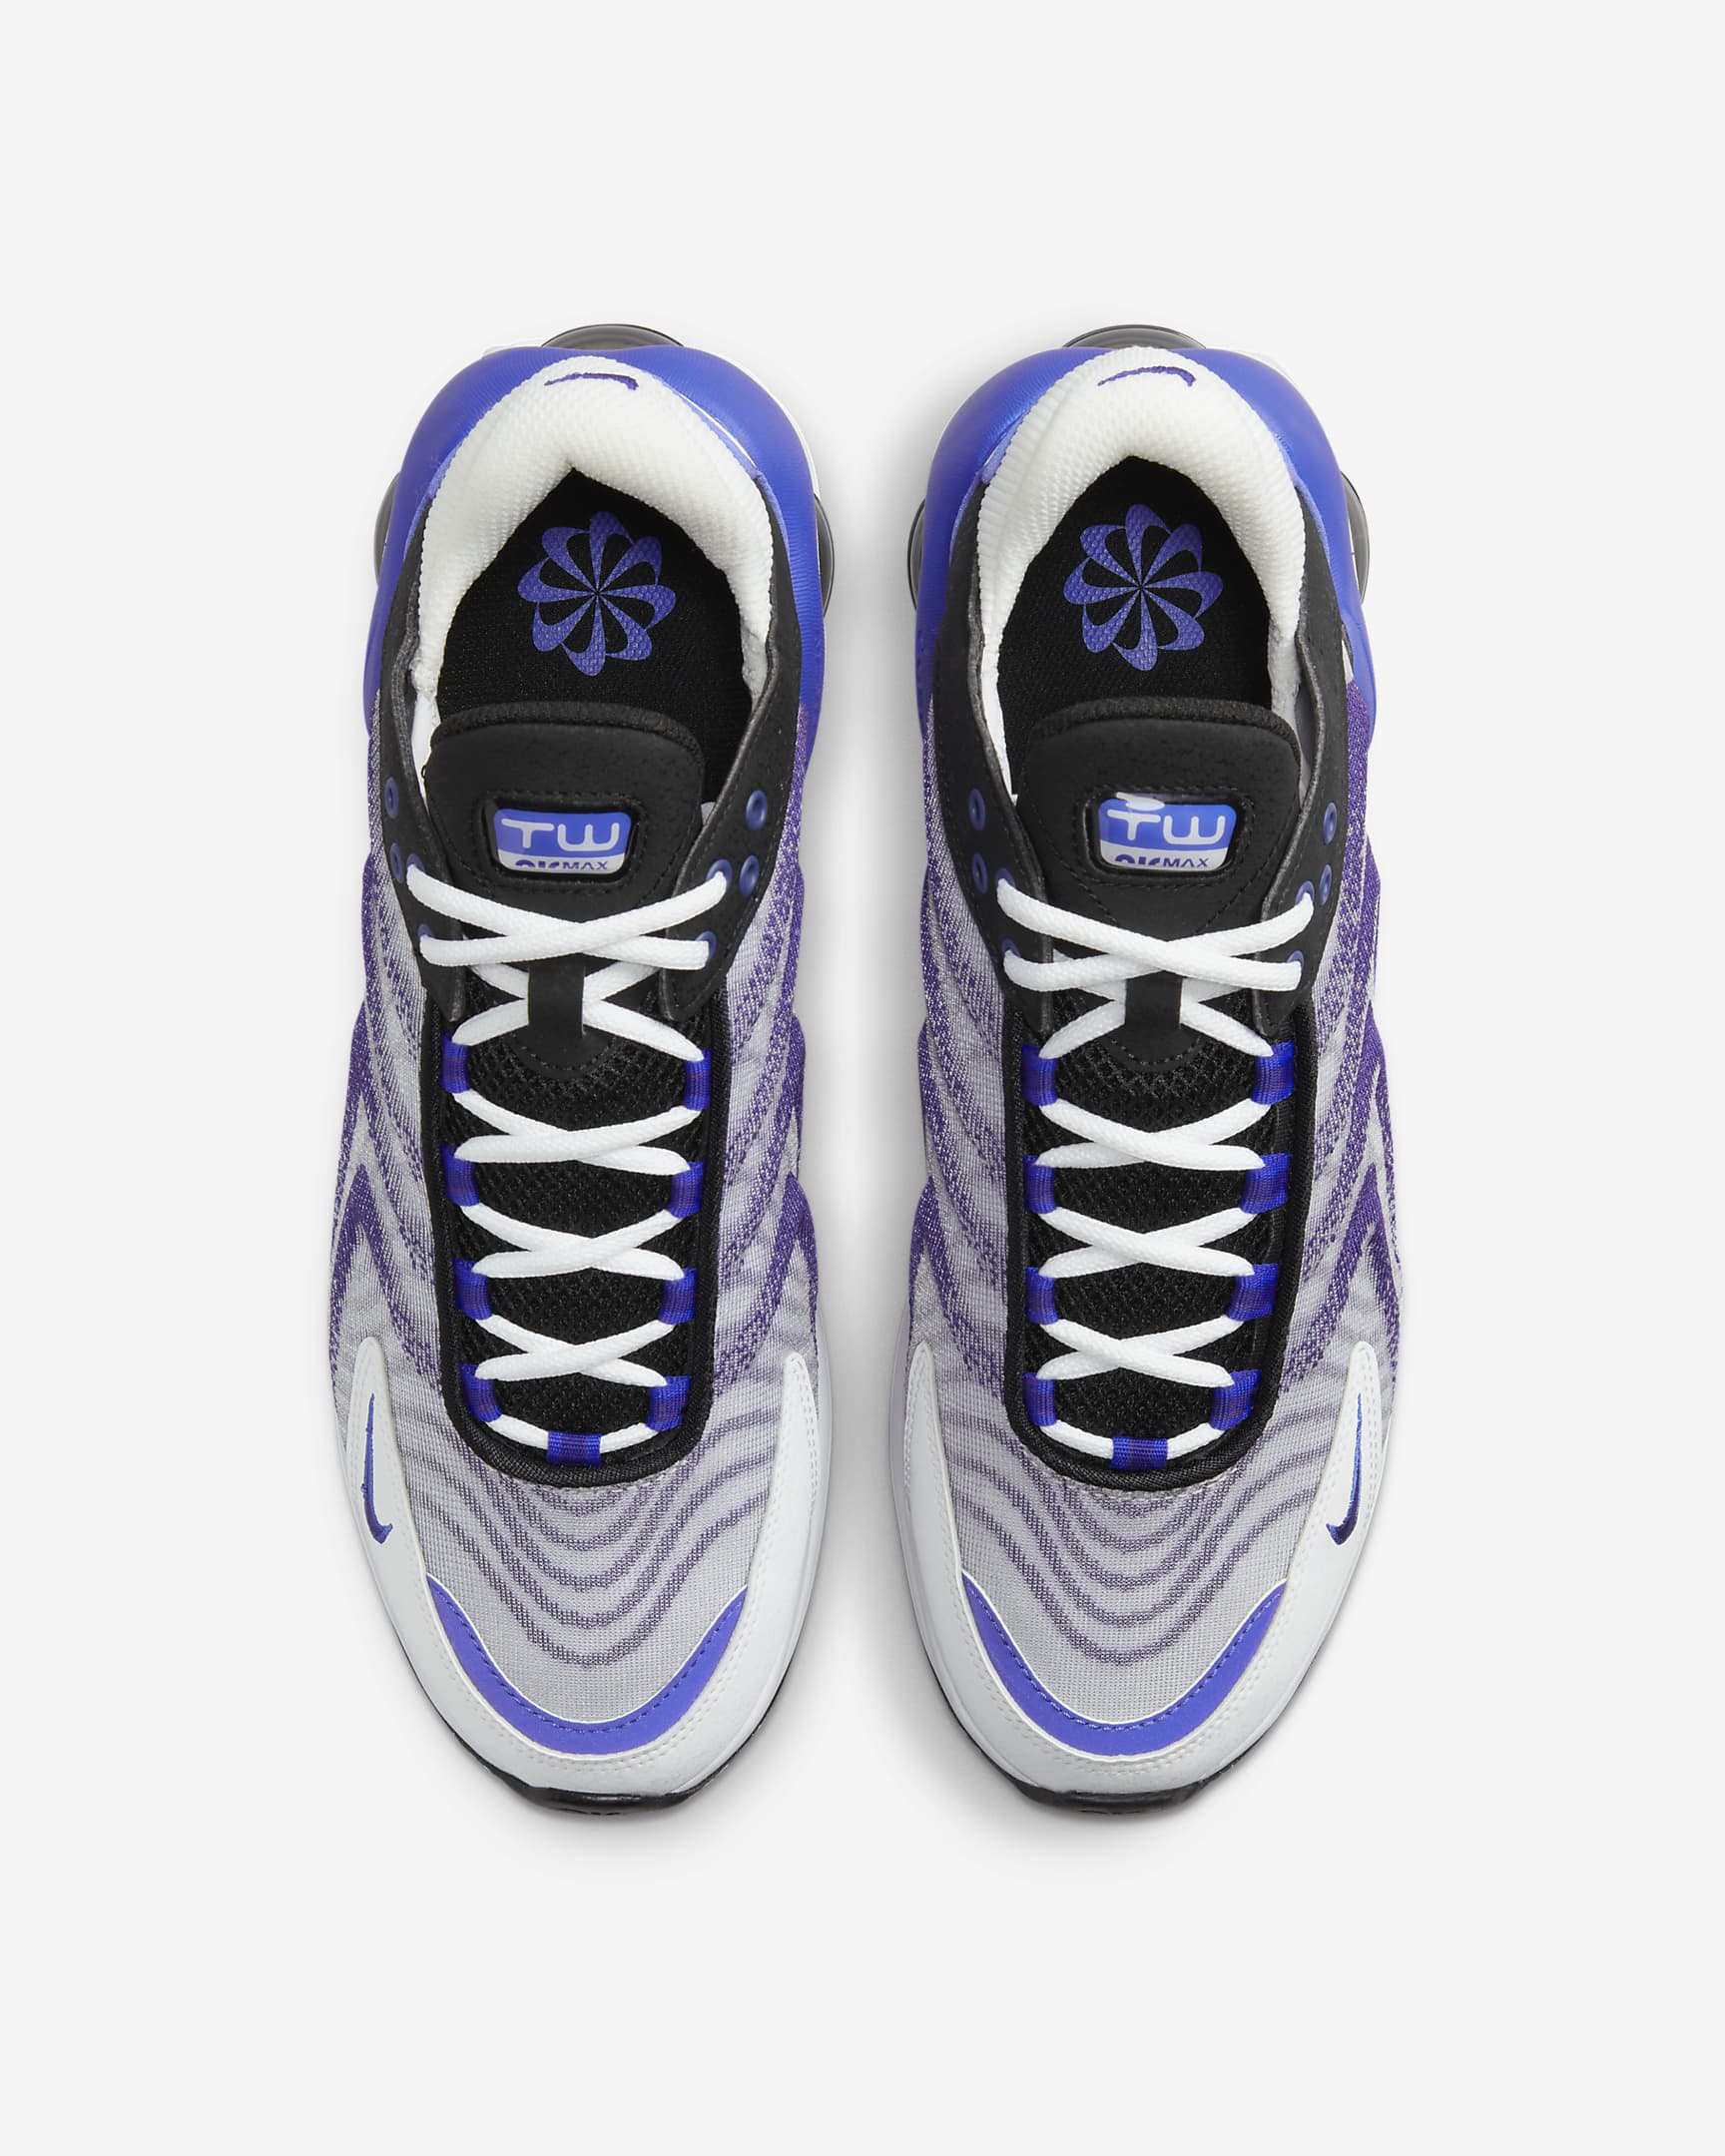 Giày Nike Air Max TW Men Shoes #Concord - Kallos Vietnam